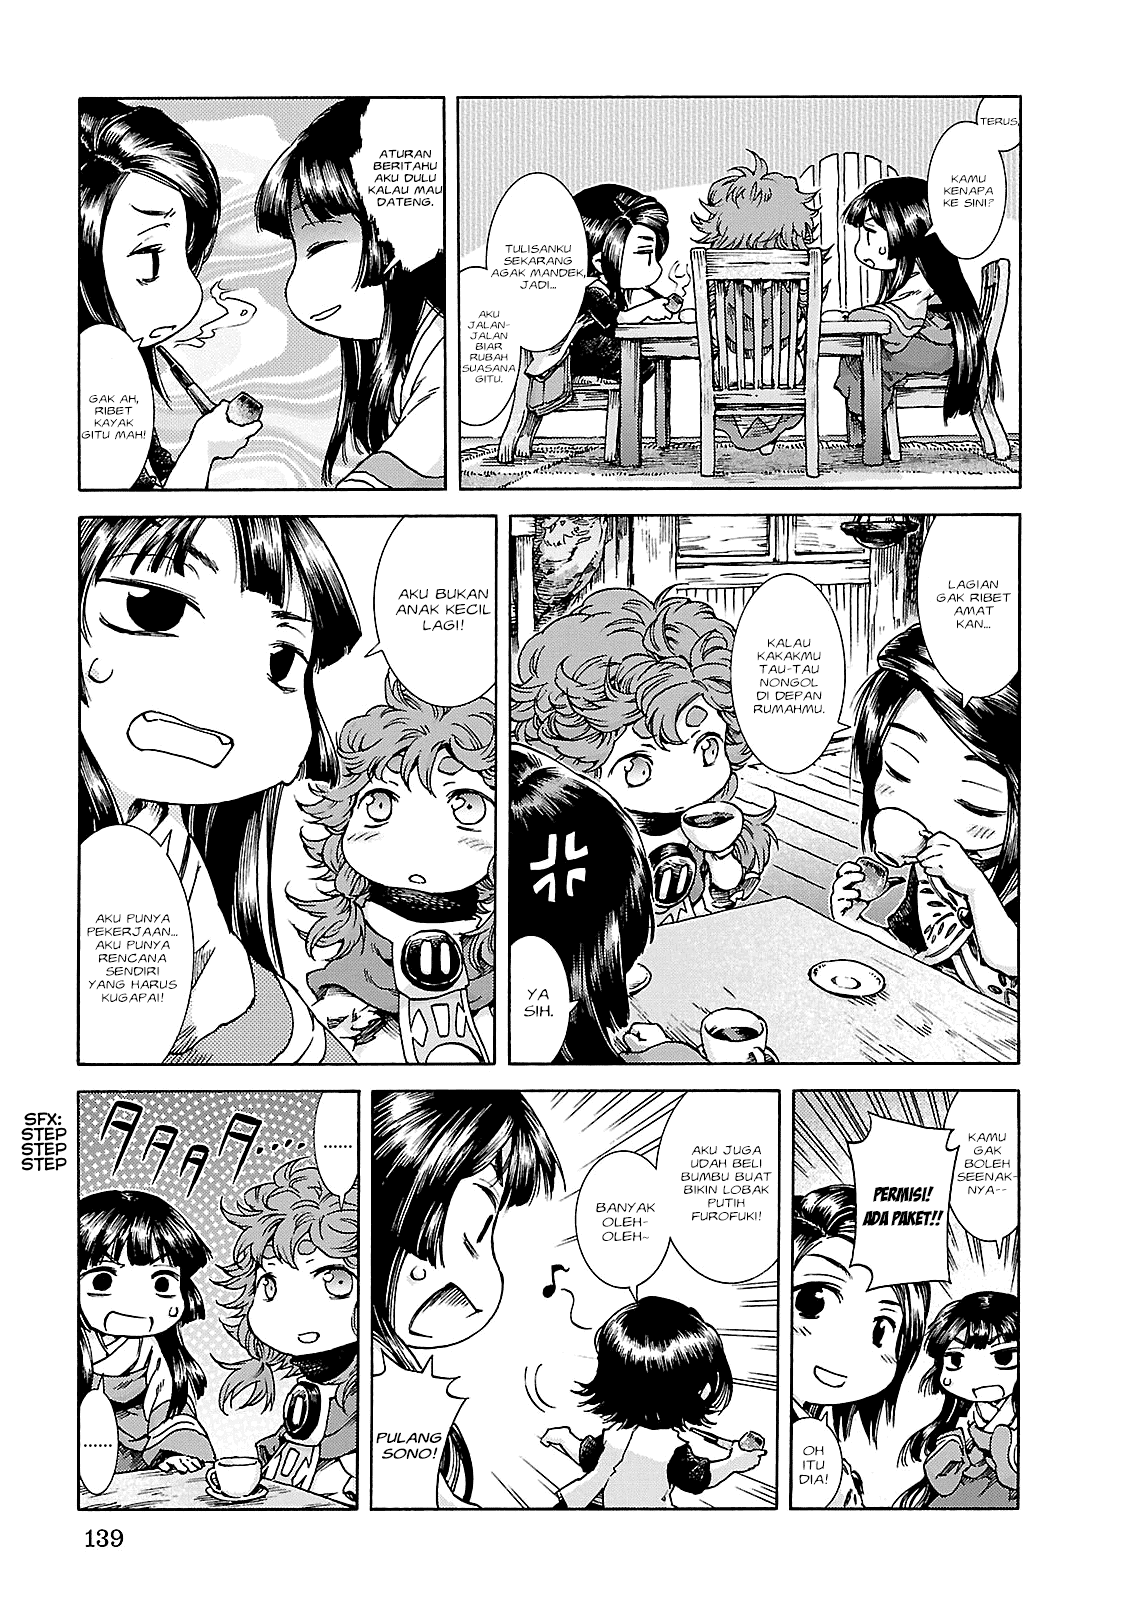 Hakumei to Mikochi Chapter 25